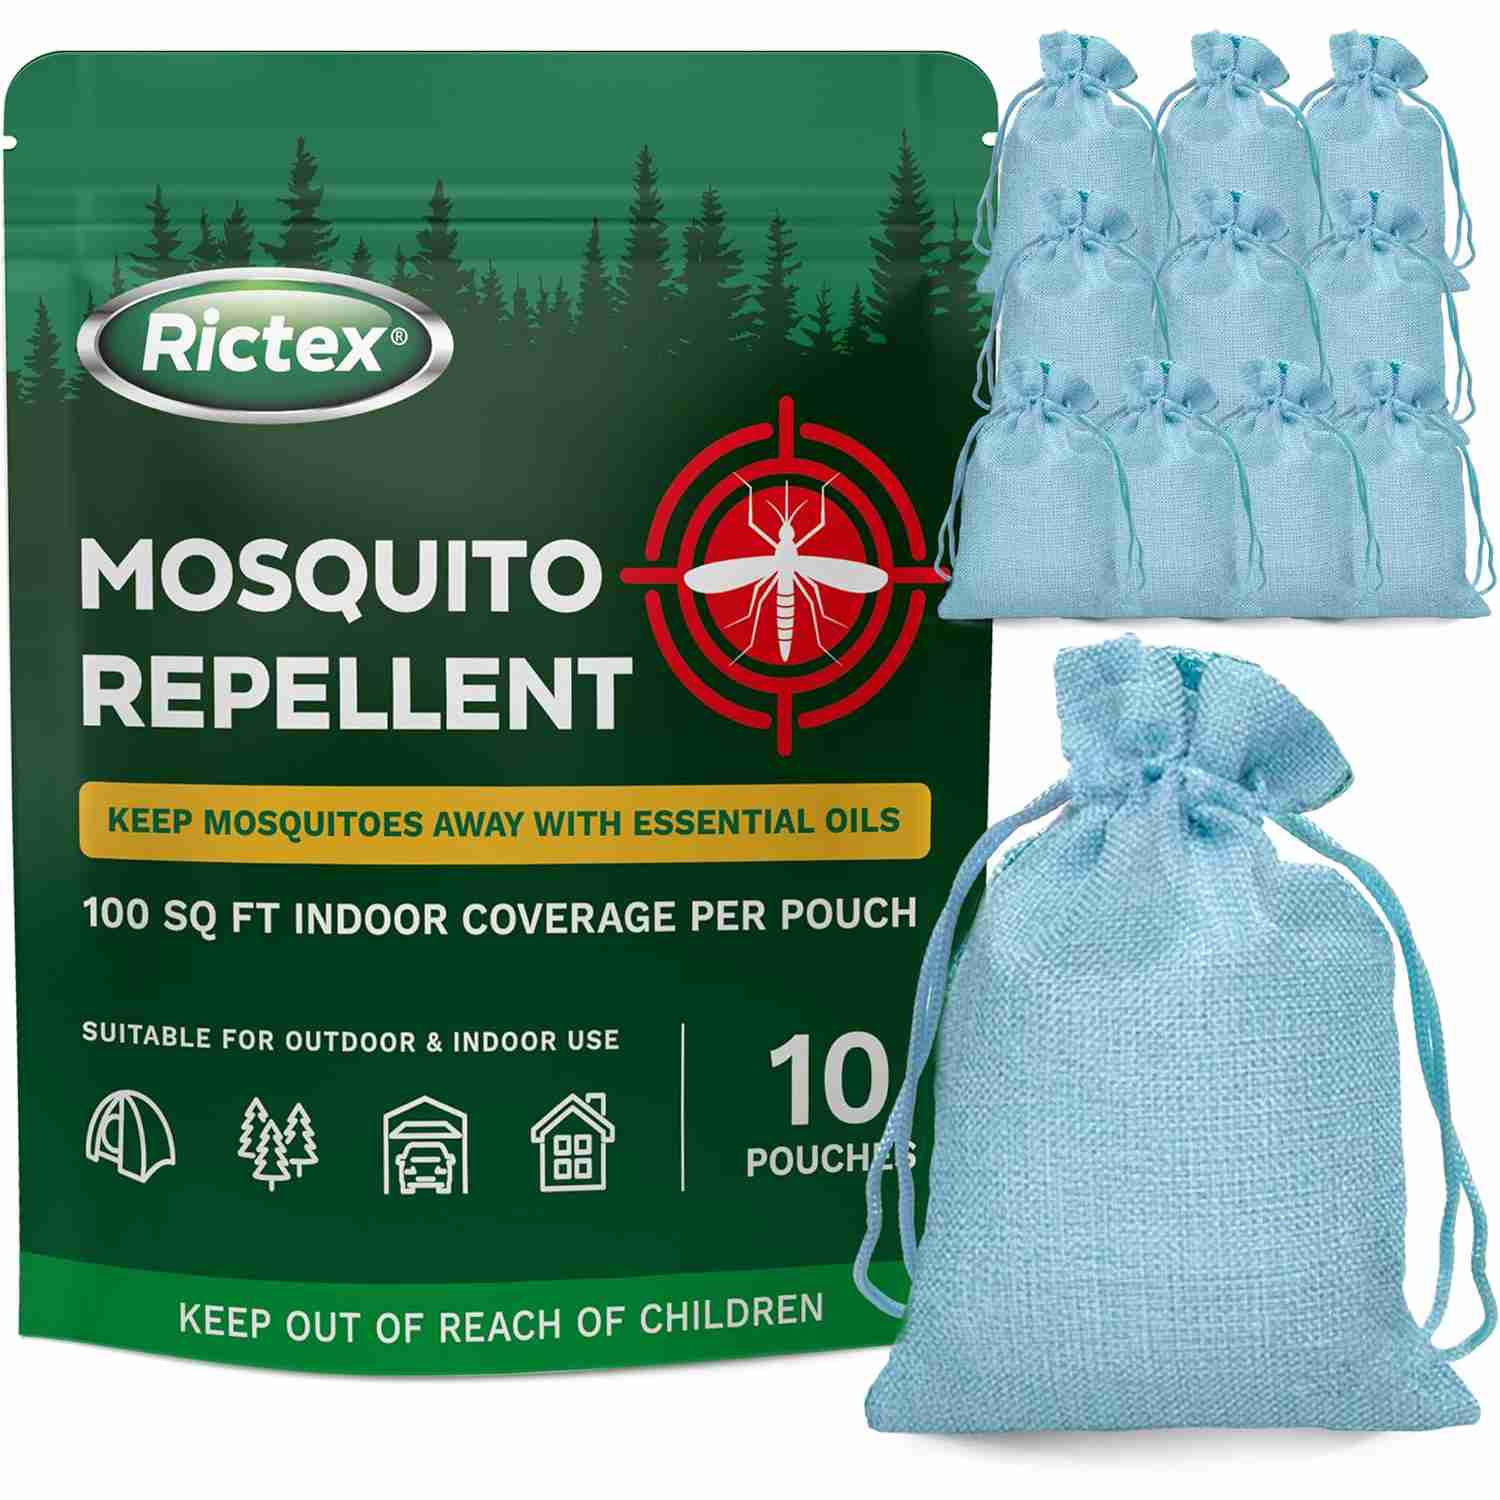 mosquitoes-repellent-outdoor with cash back rebate